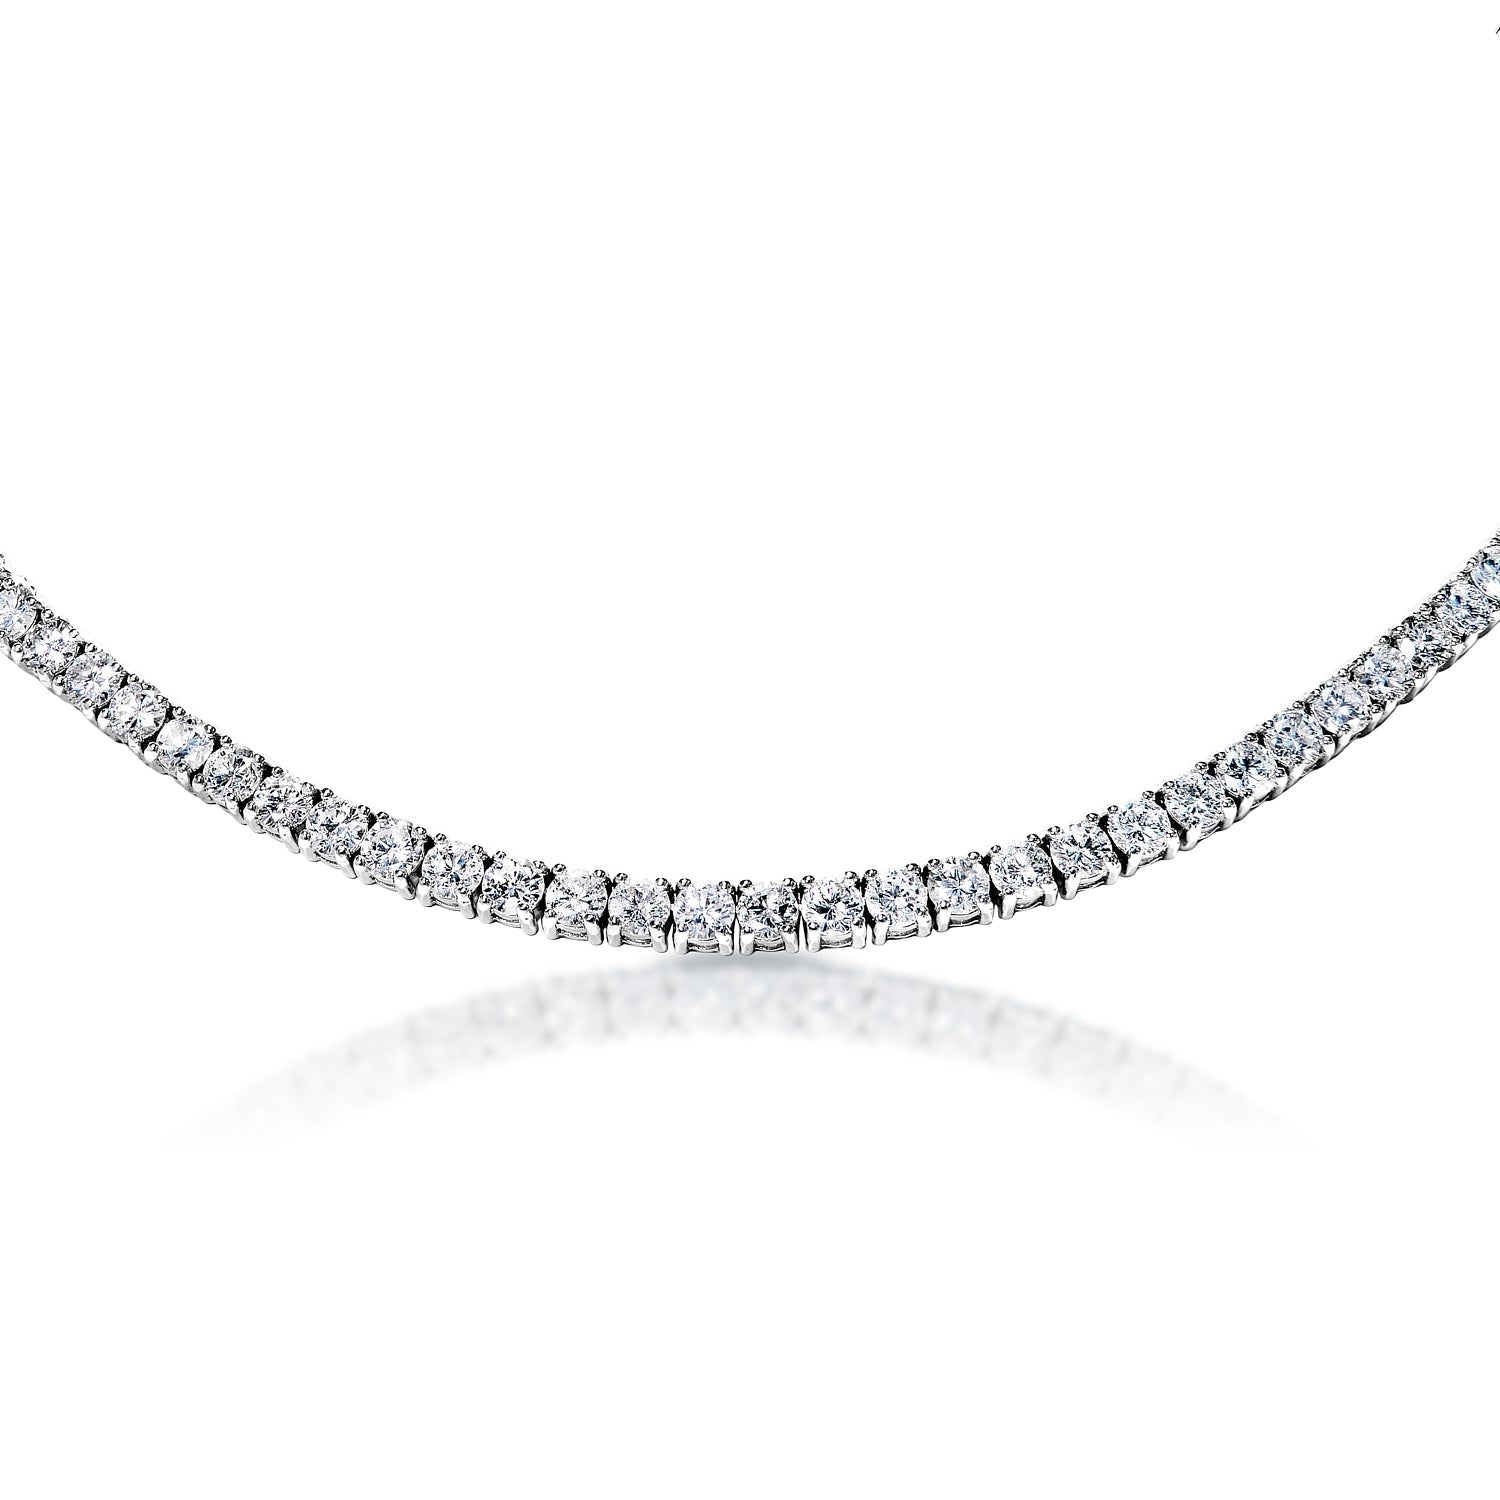 Karsyn 22 Carat Round Brilliant Diamond Tennis Necklace in 14k White Gold Close View